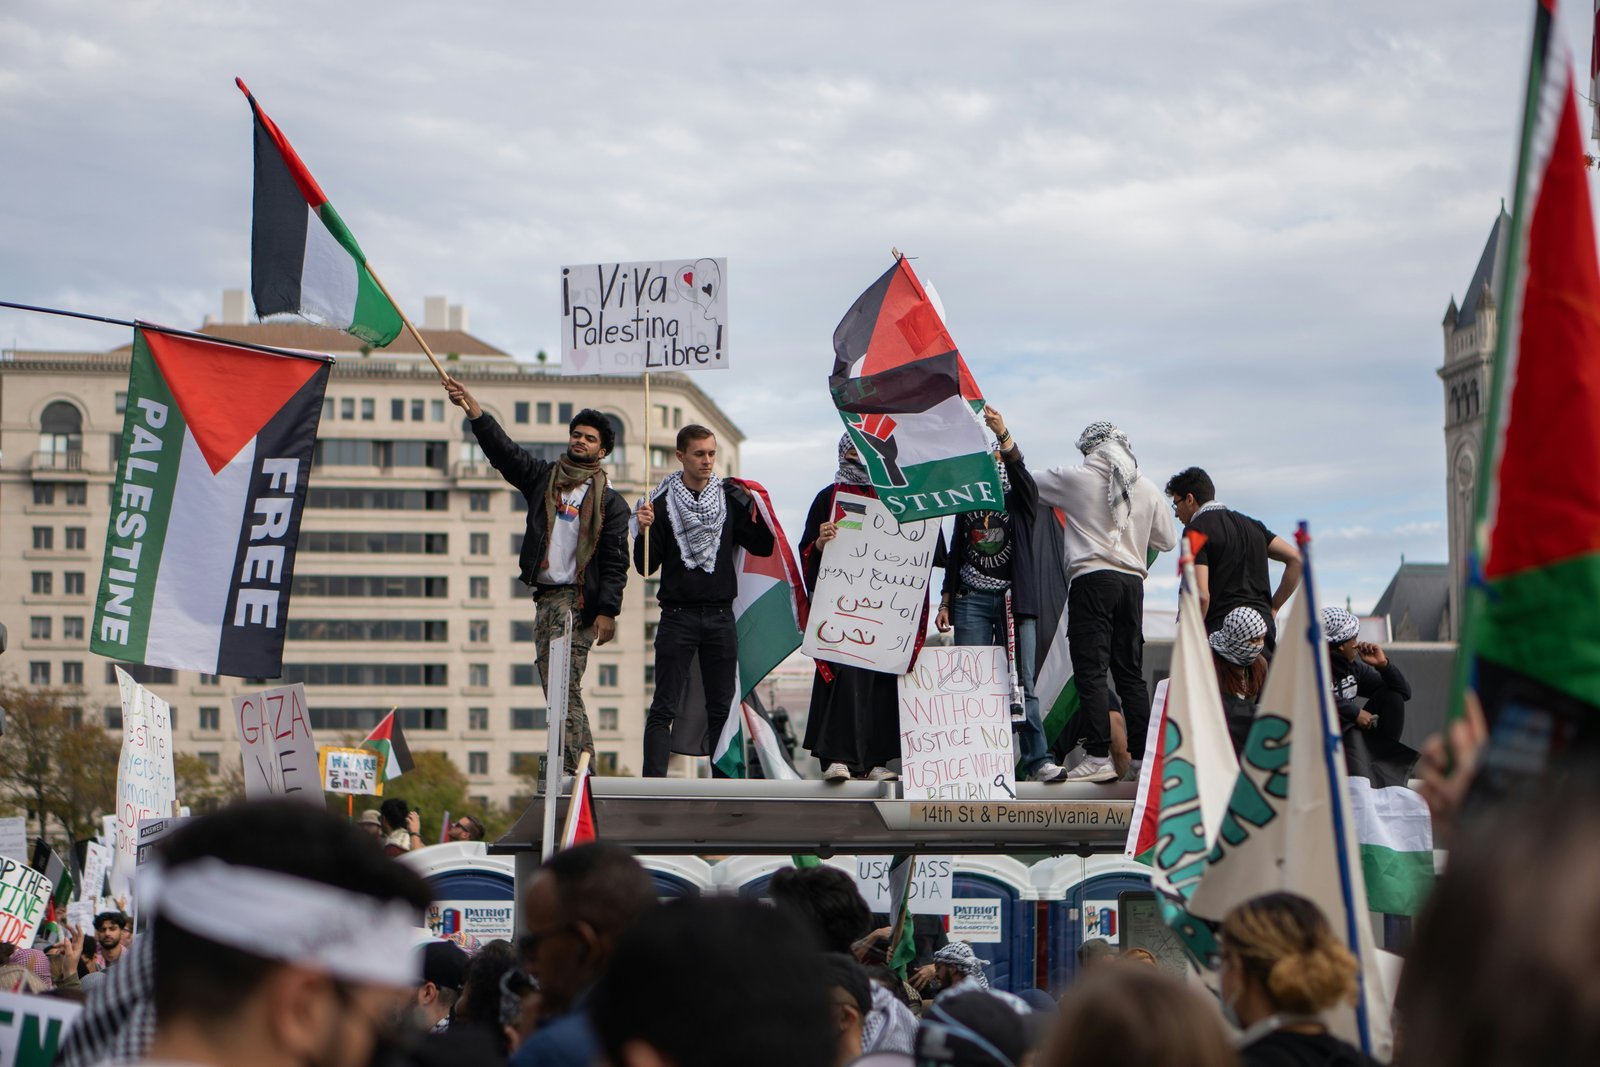 Protesto em favor do povo palestino. Crédito: Ian Hitchinson, Unsplash